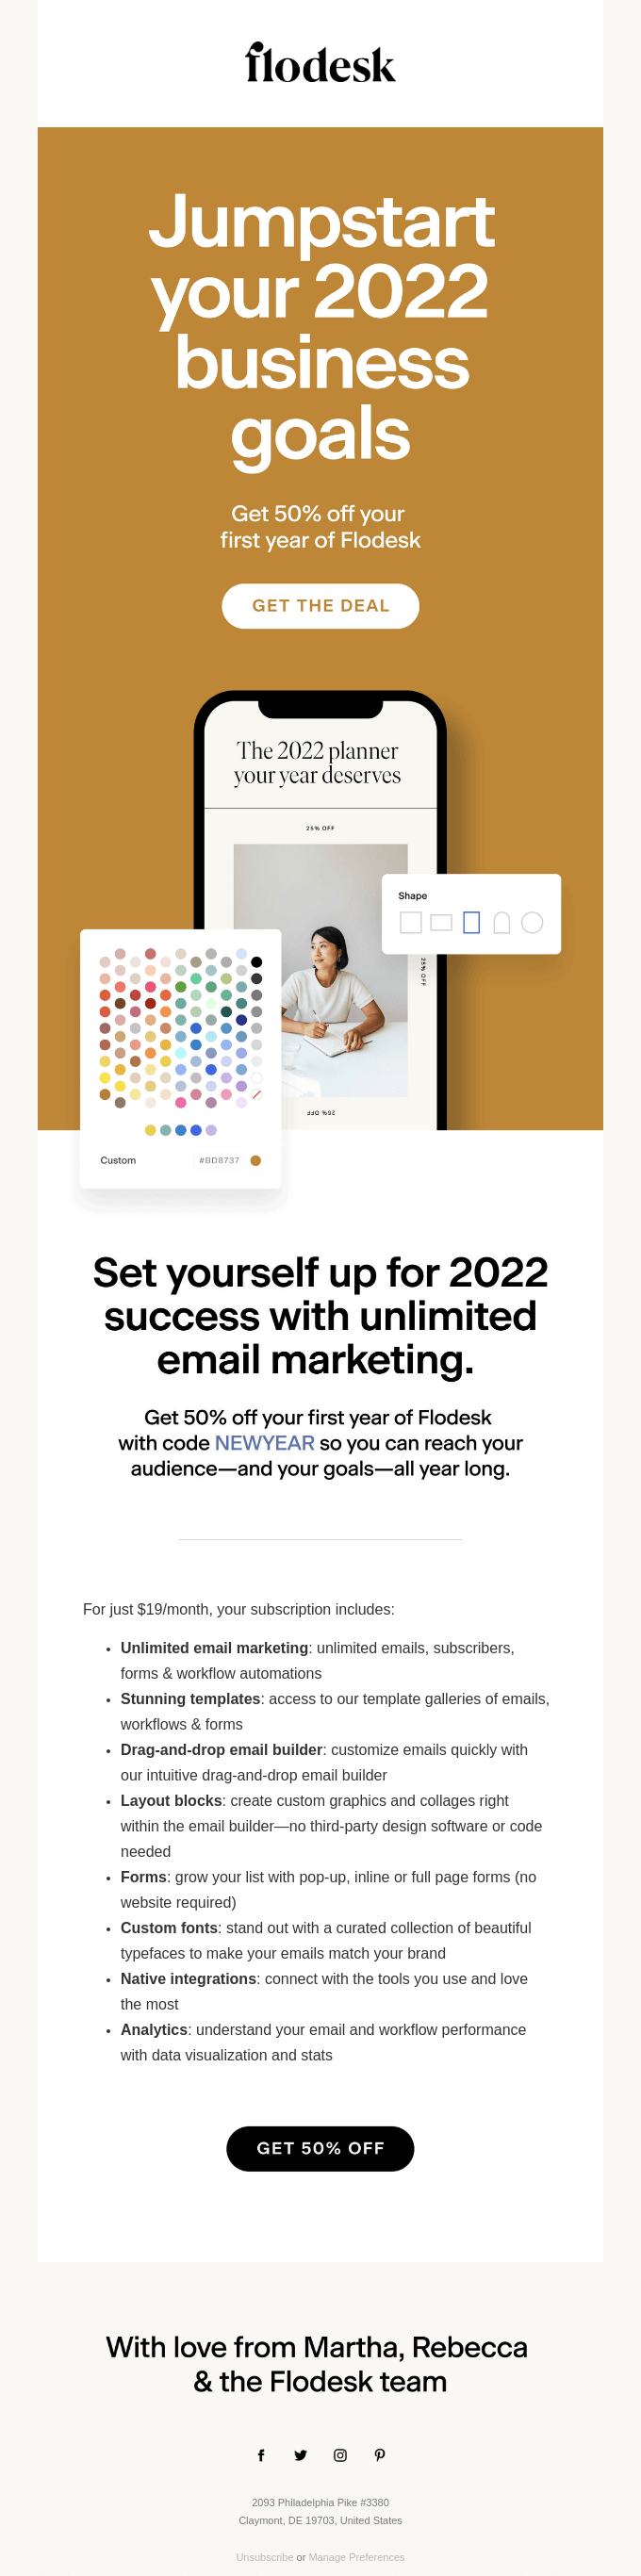 Get 50% off to jumpstart your 2022 business goals - Flodesk Email Newsletter